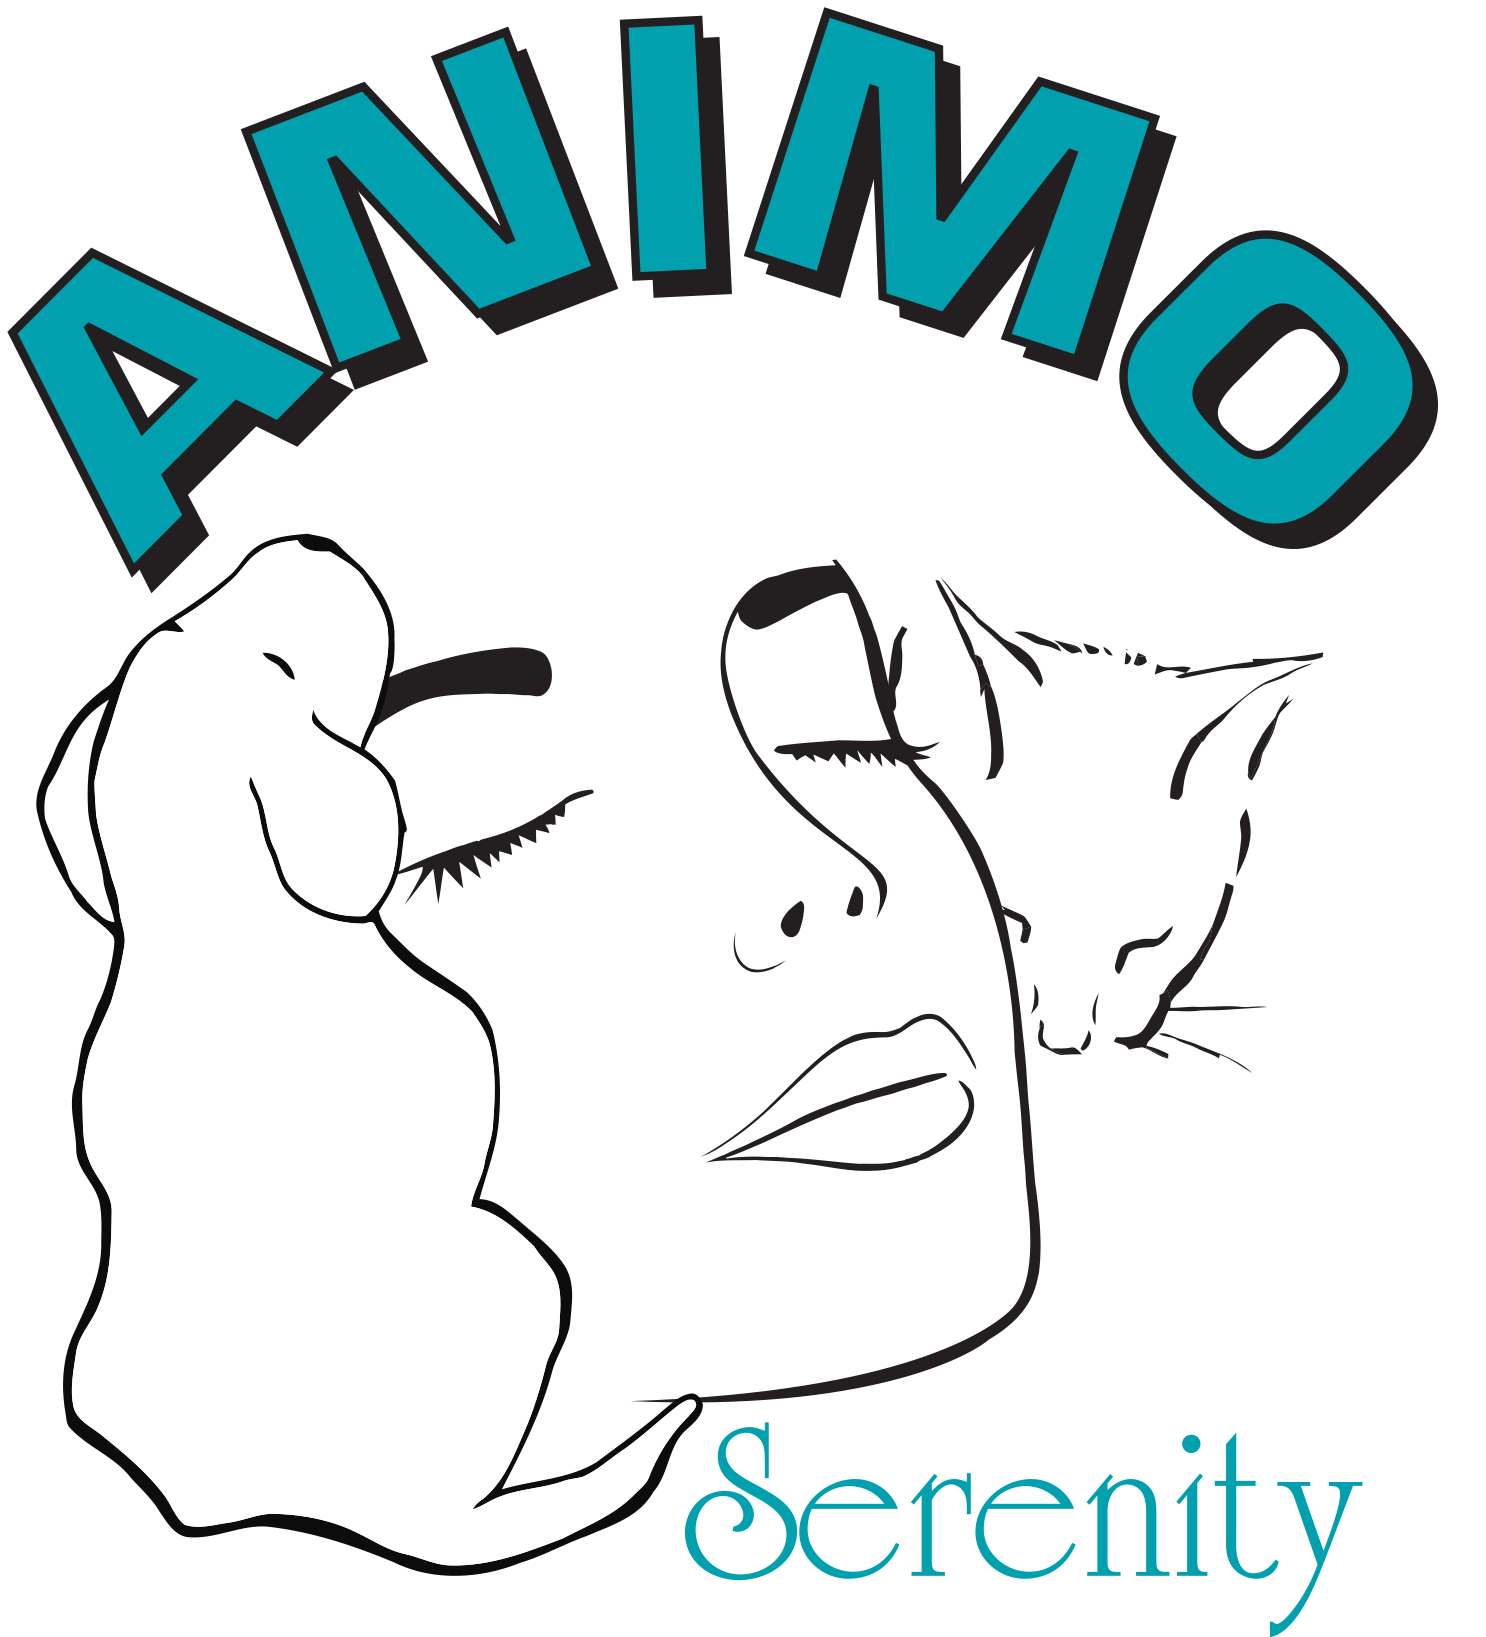 Animo Serenity